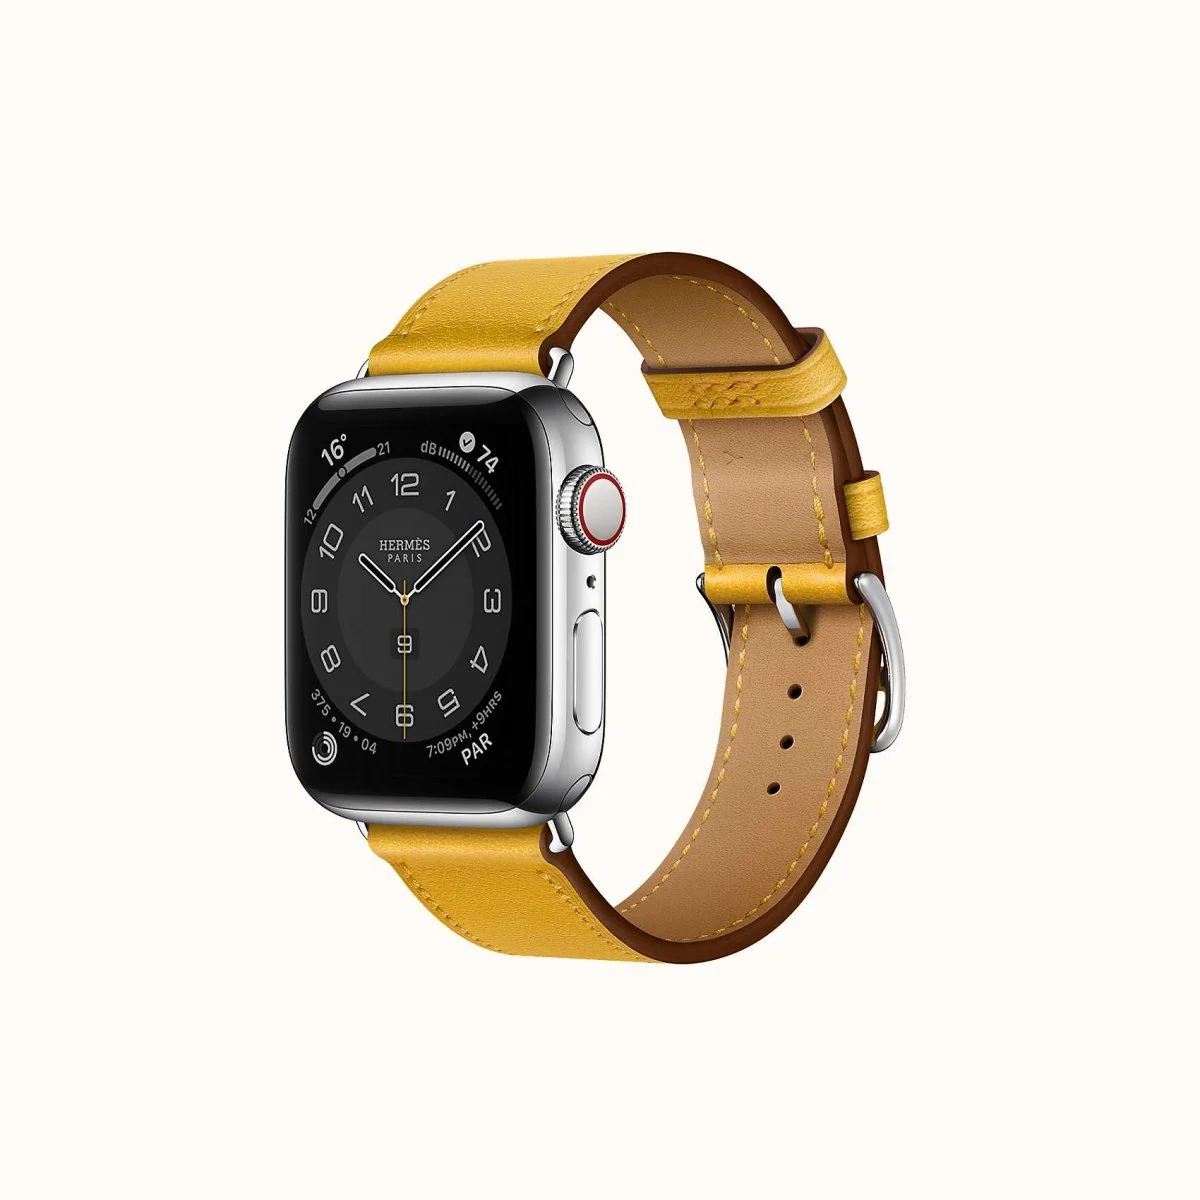 Řemínek iMore Single Tour Apple Watch Series 3/2/1 (38mm) - Žlutý